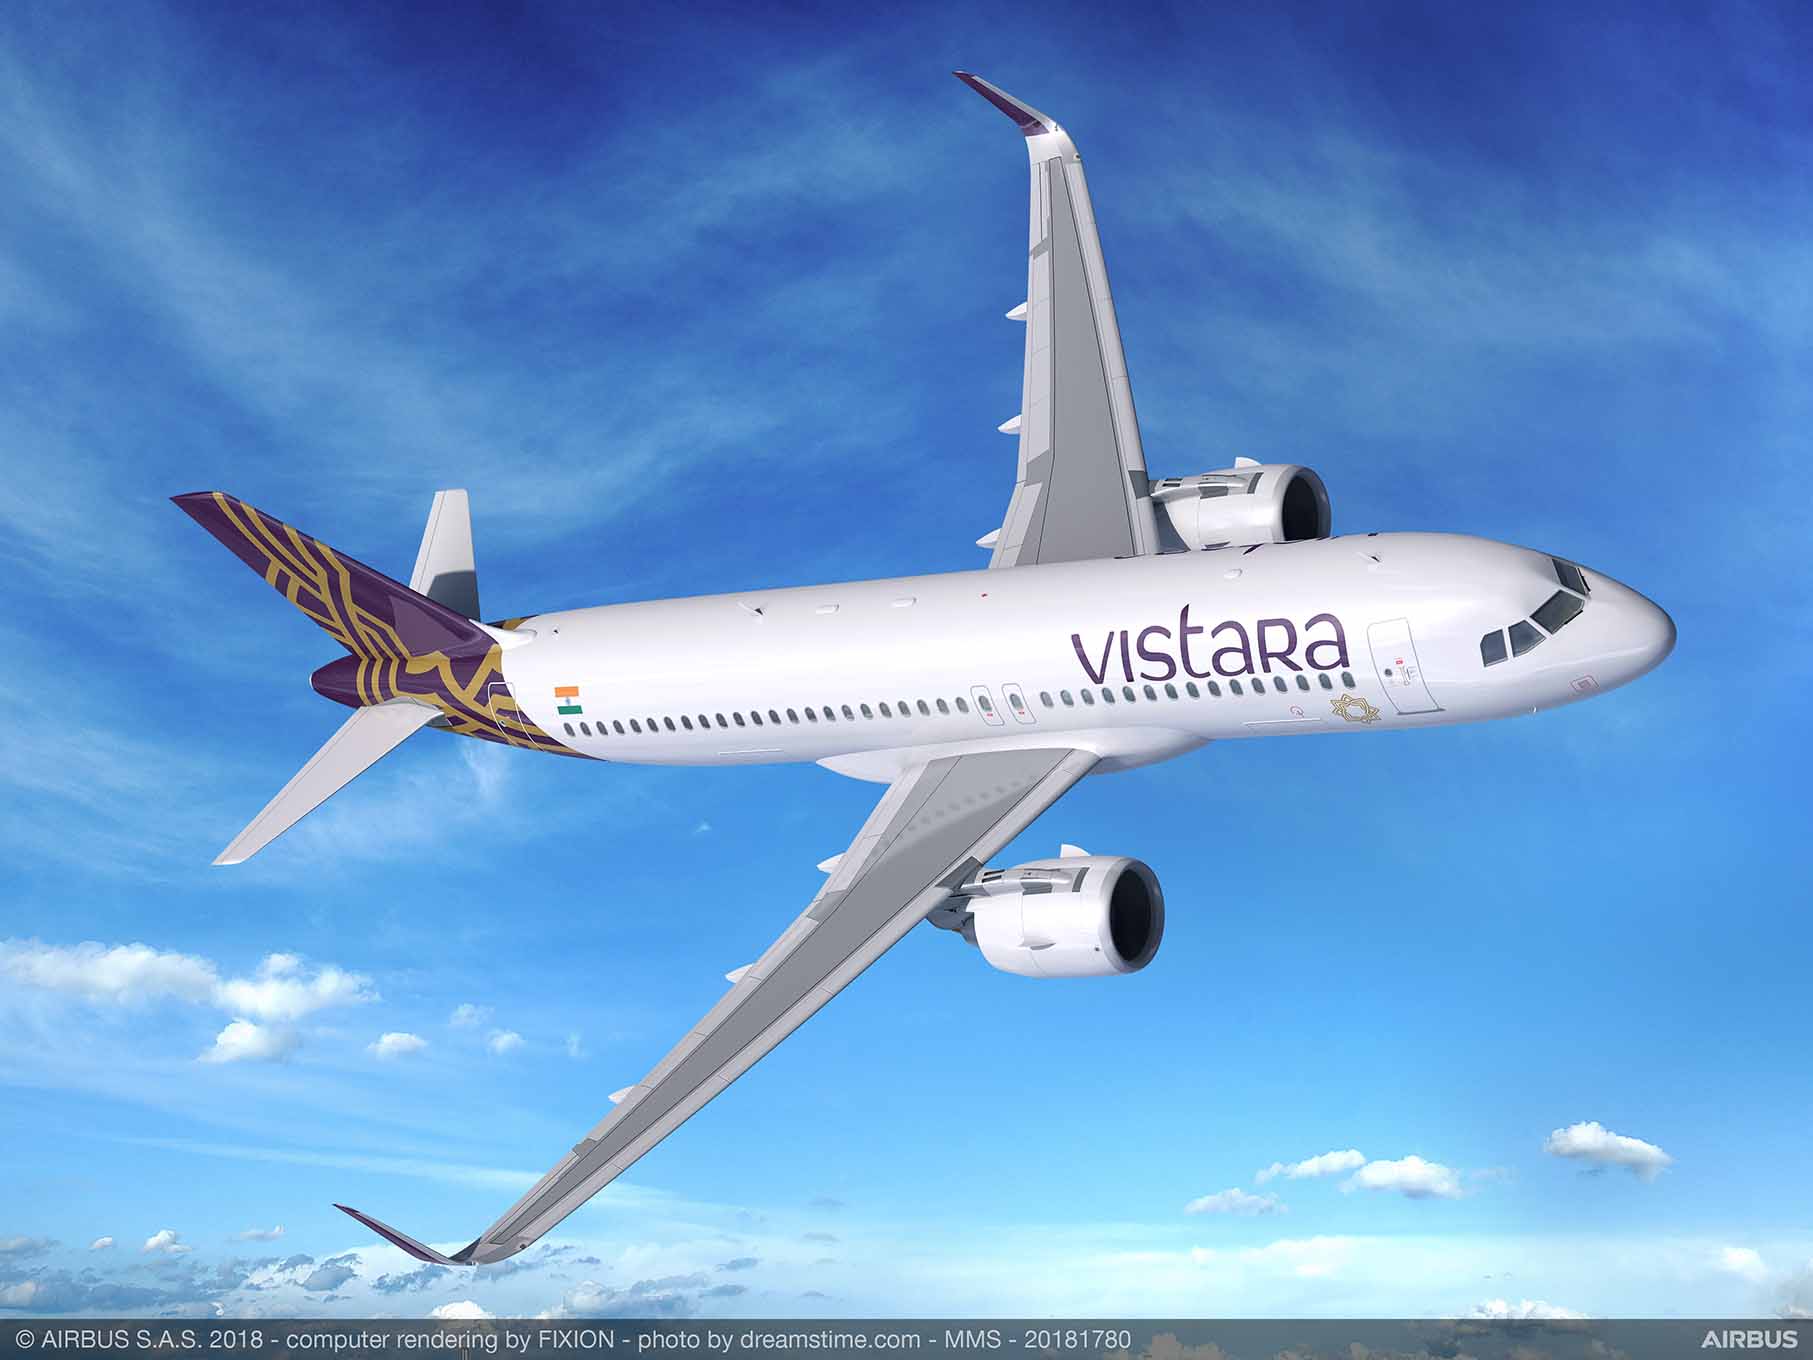 Air India to discontinue the Vistara brand post-merger